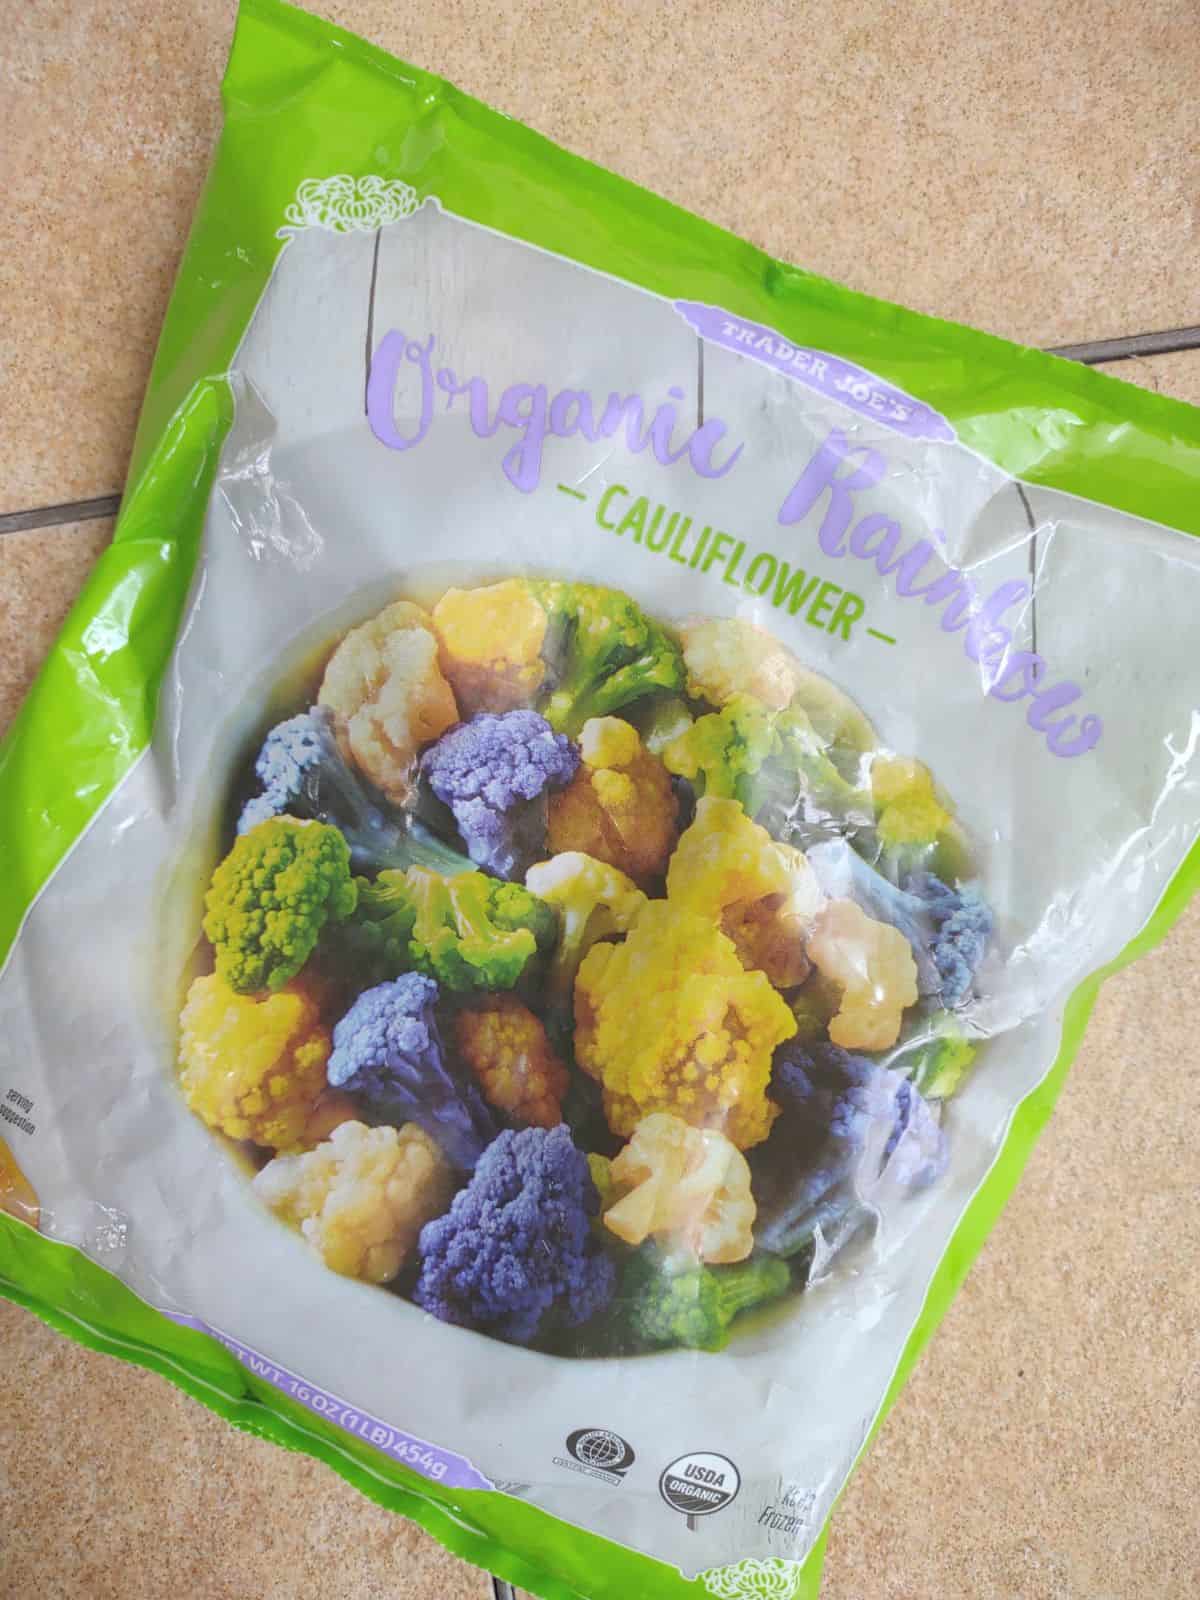 A bag of Trader Joe's Organic Rainbow Cauliflower on a table.